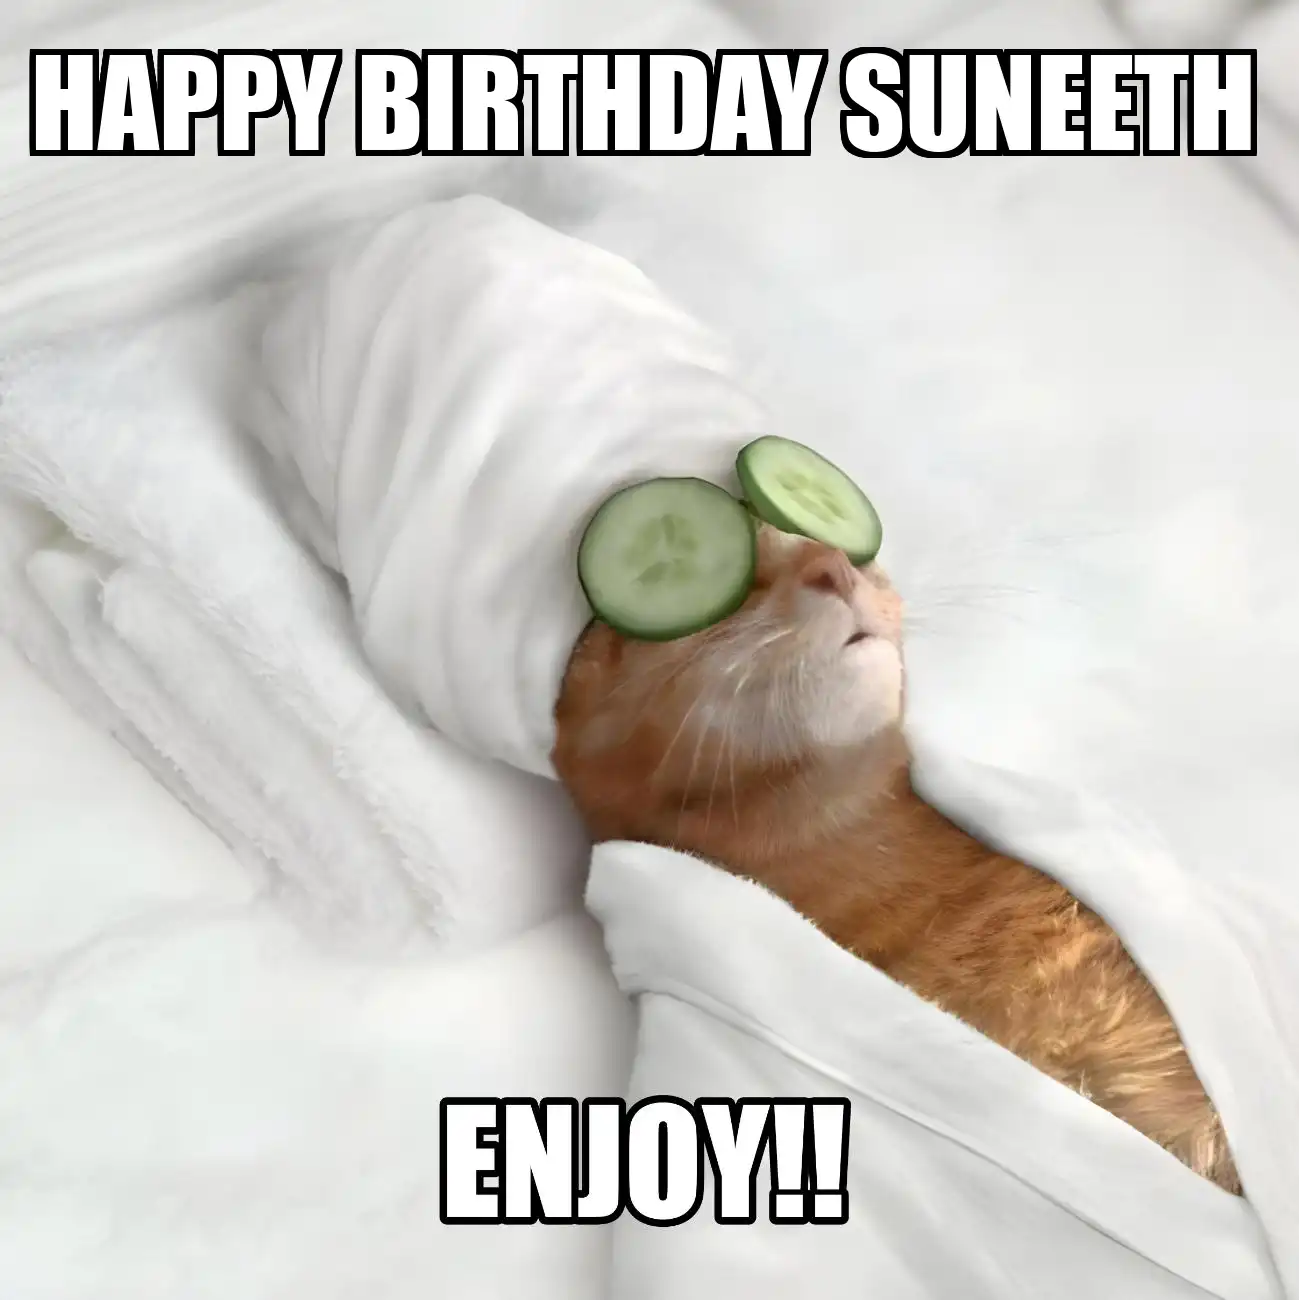 Happy Birthday Suneeth Enjoy Cat Meme